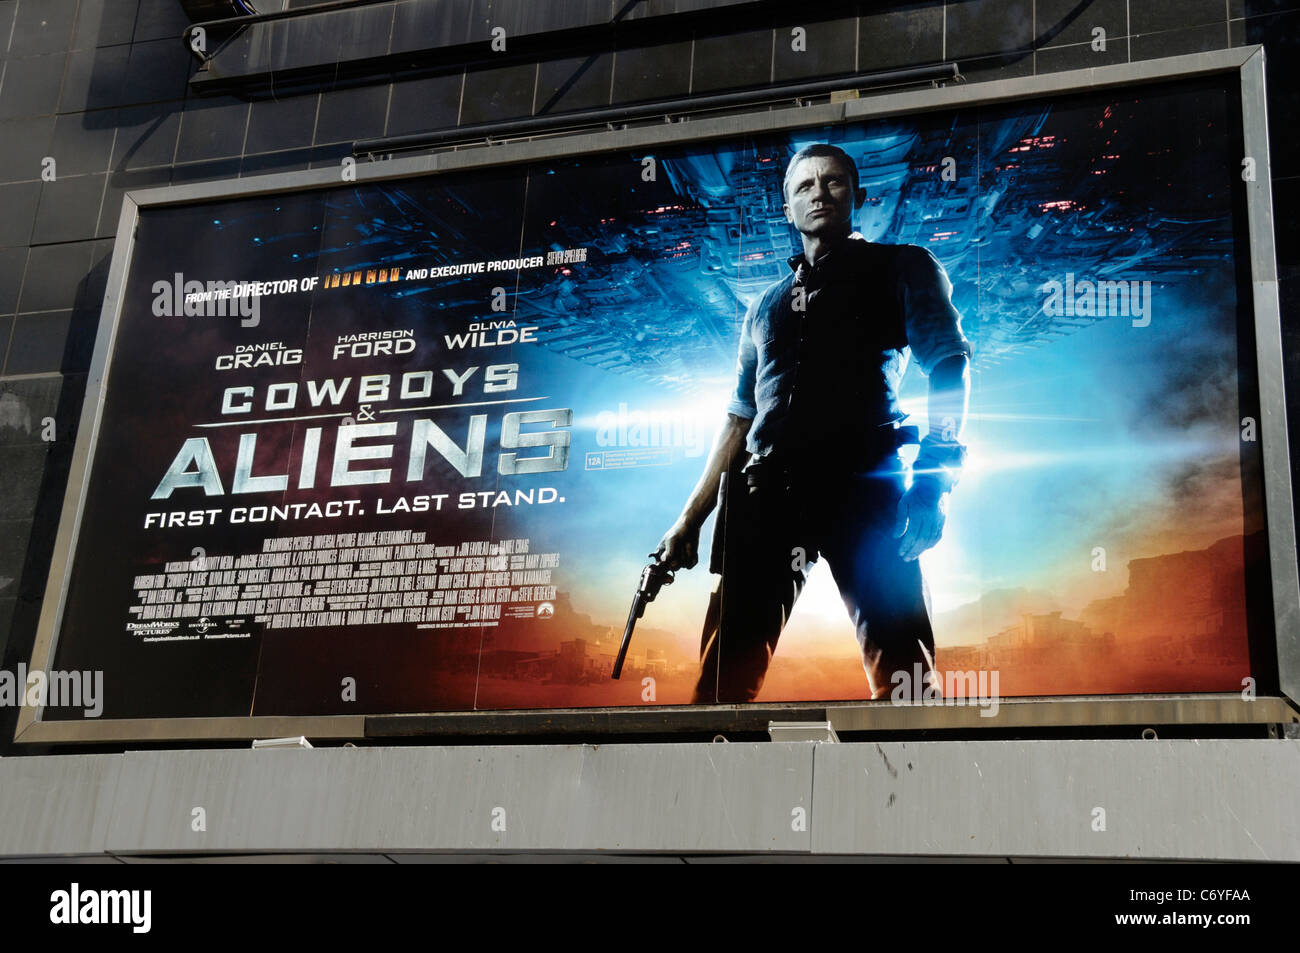 https://c8.alamy.com/comp/C6YFAA/billboard-promoting-the-movie-cowboys-and-aliens-C6YFAA.jpg